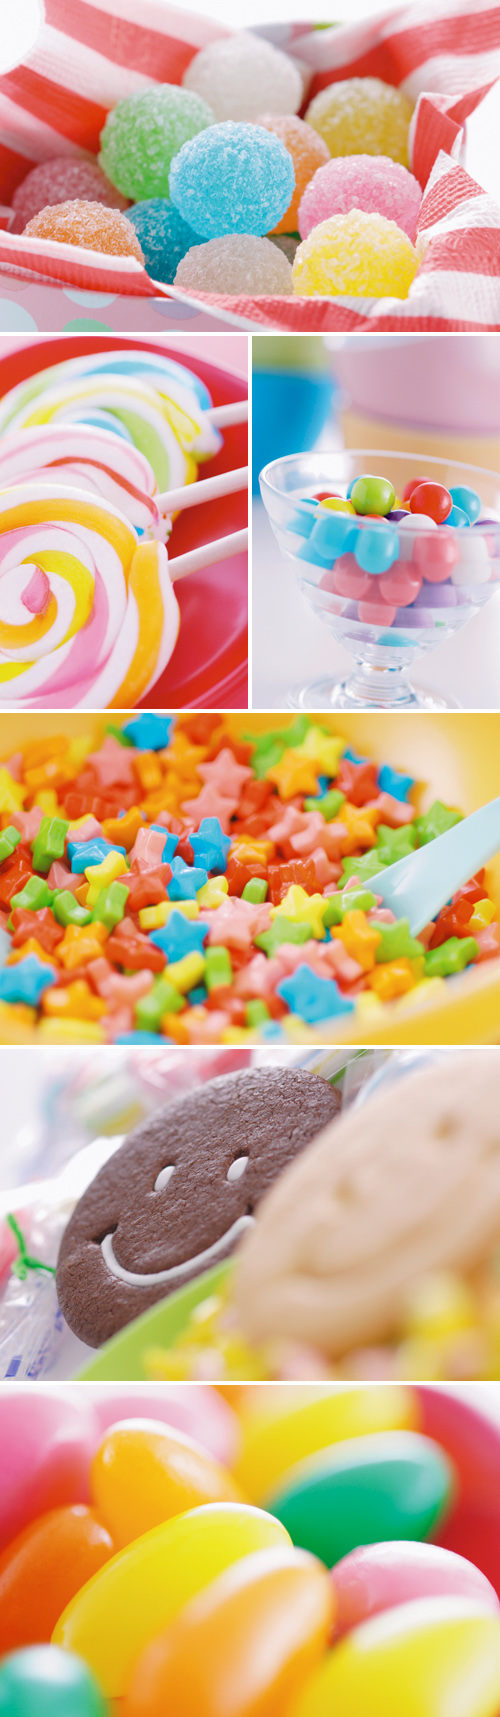 Stock Photos - Pop & Sweets